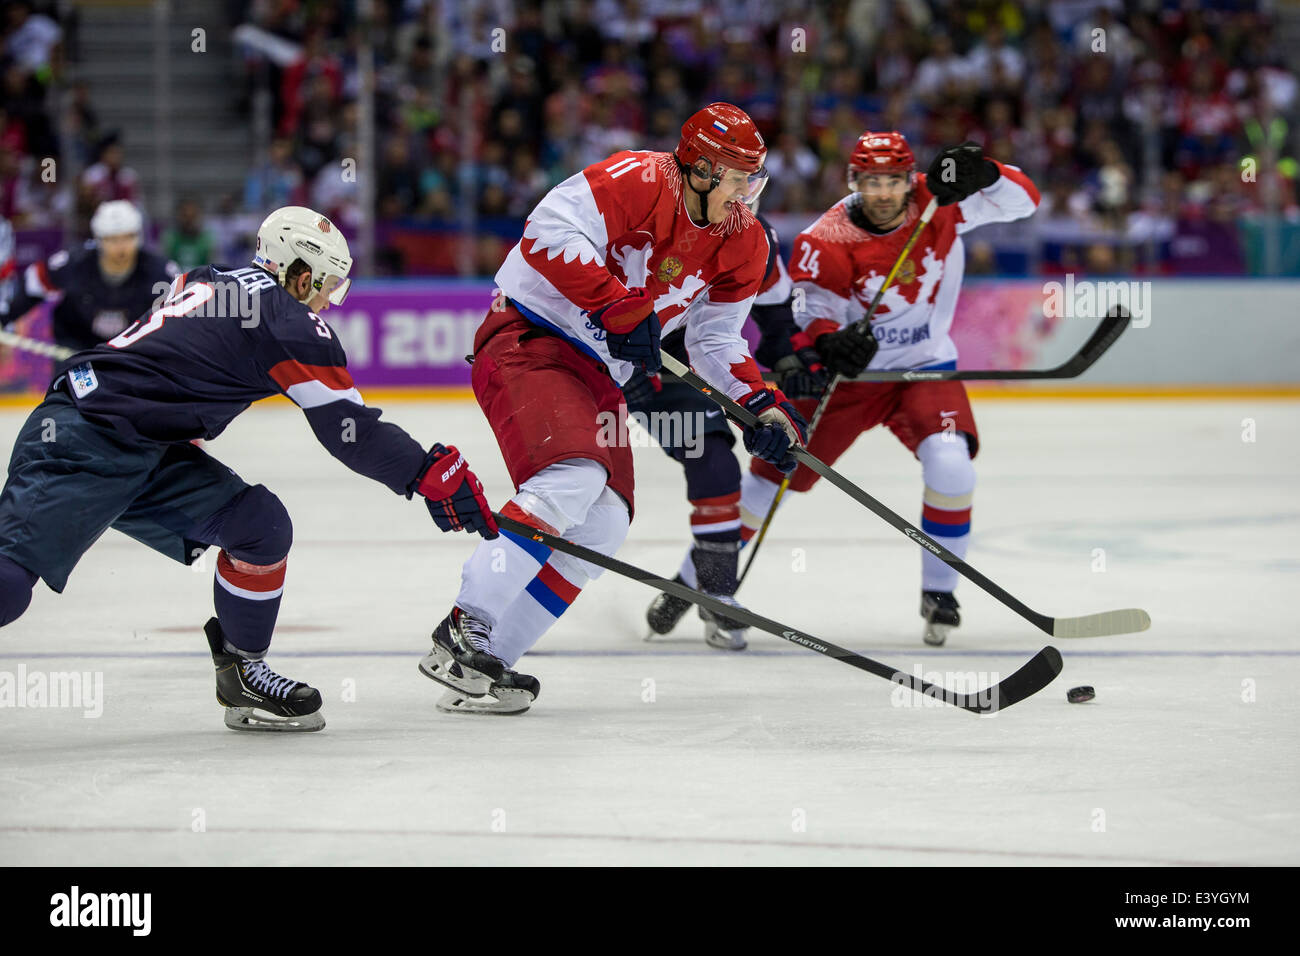 Yevgeni Malkin (RUS) during ice hockey game vs USA at the Olympic Winter Games, Sochi 2014 Stock Photo